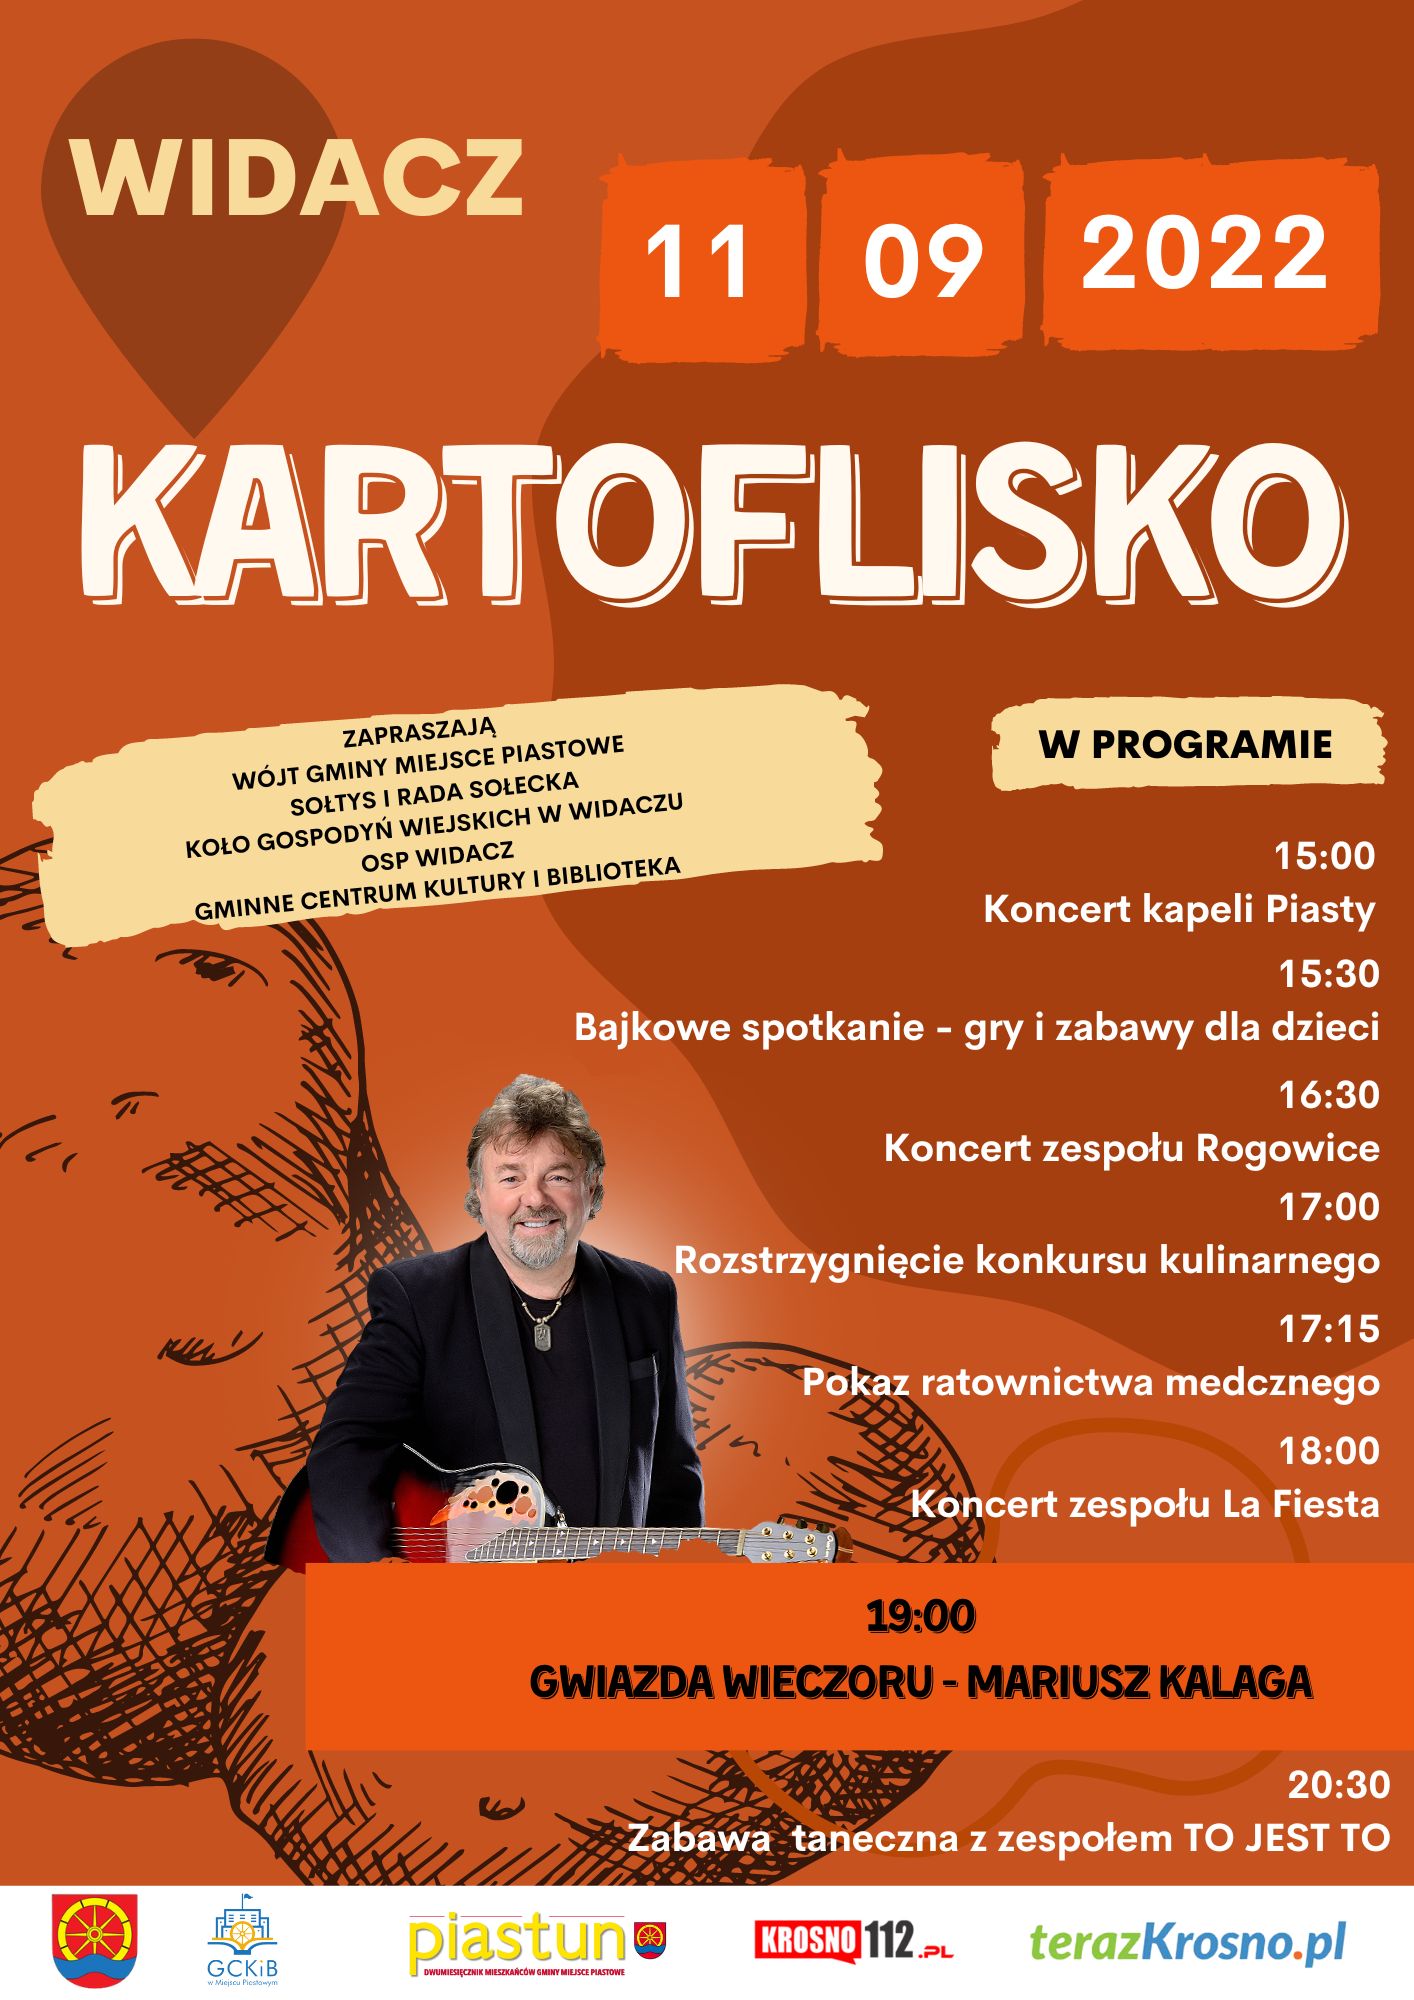 You are currently viewing Kartoflisko w Widaczu